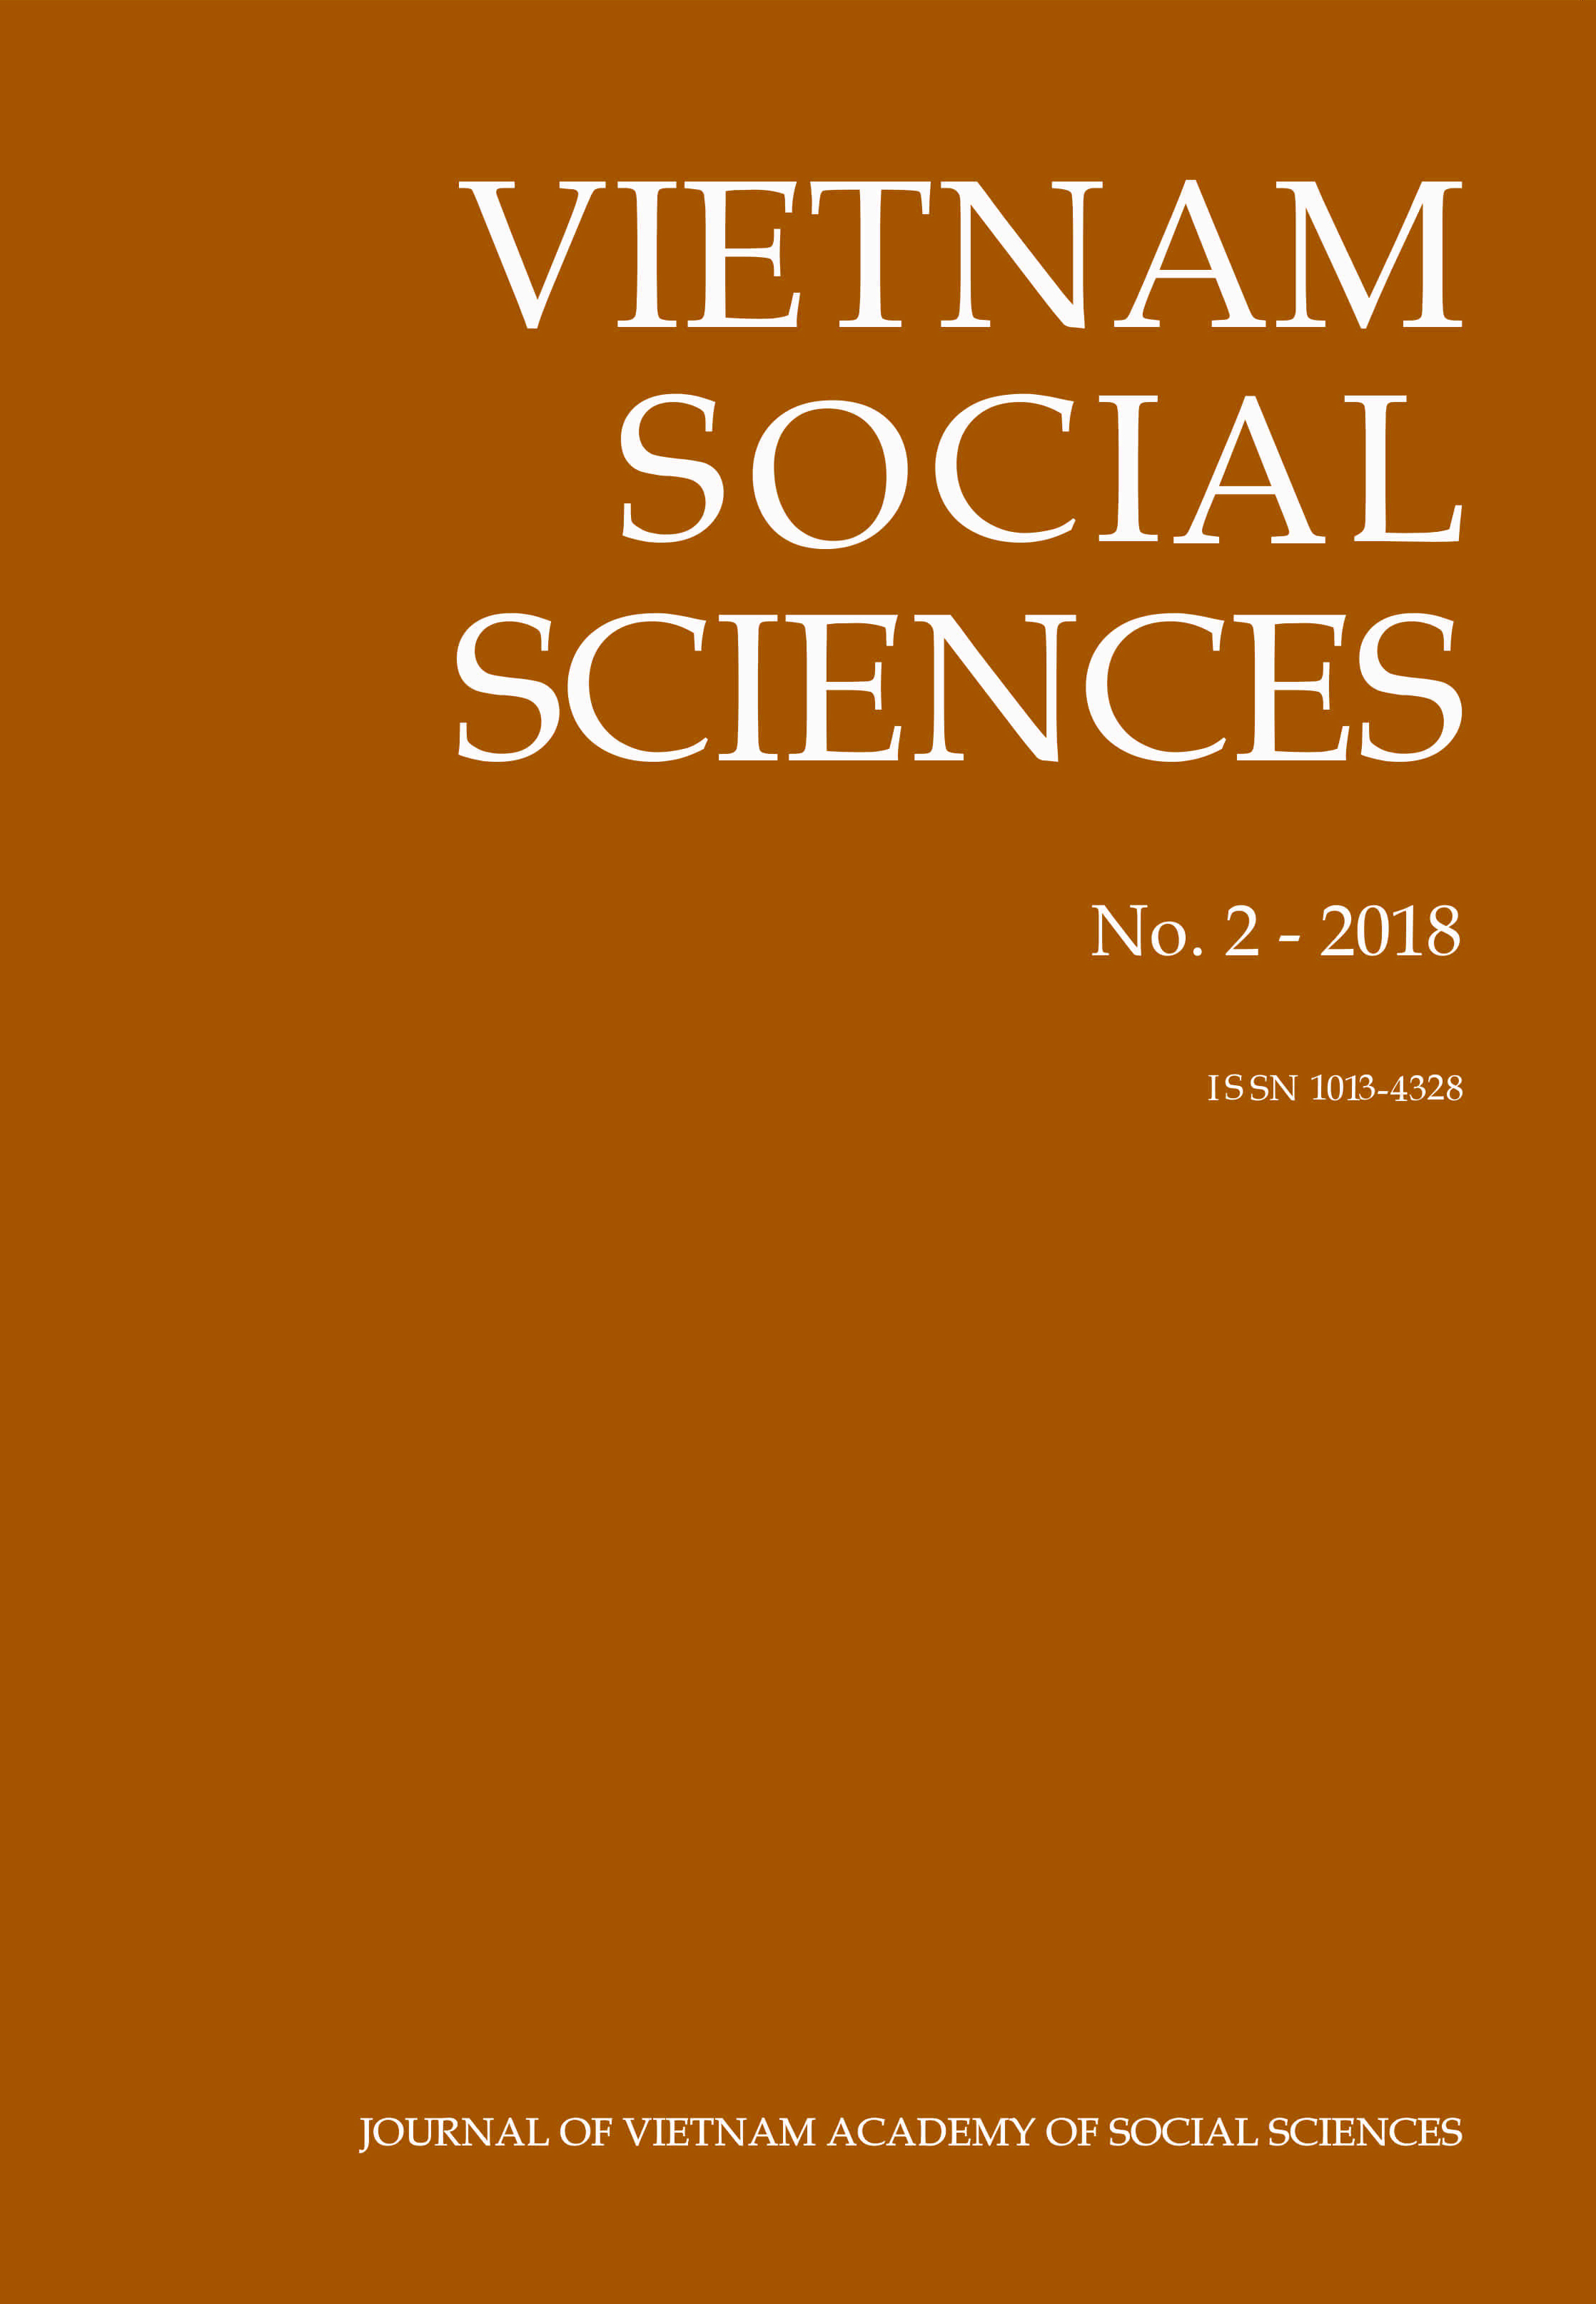 Vietnam Social Sciences. No. 2 - 2018